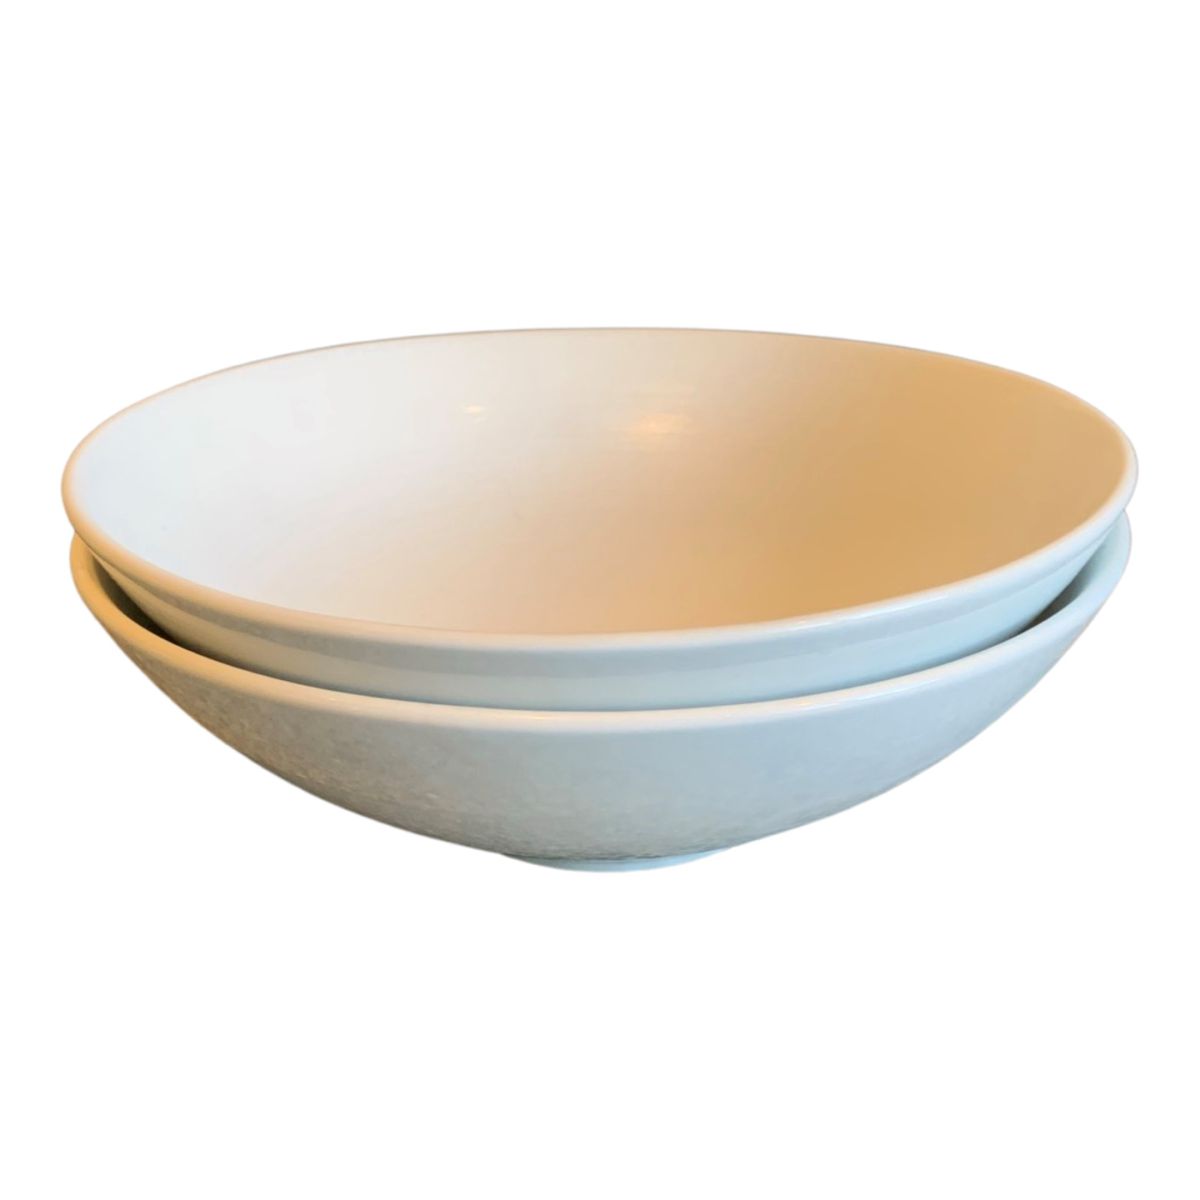 bowl wit porselein strak design mat glazuur rond 168 hg 56cmbox 6